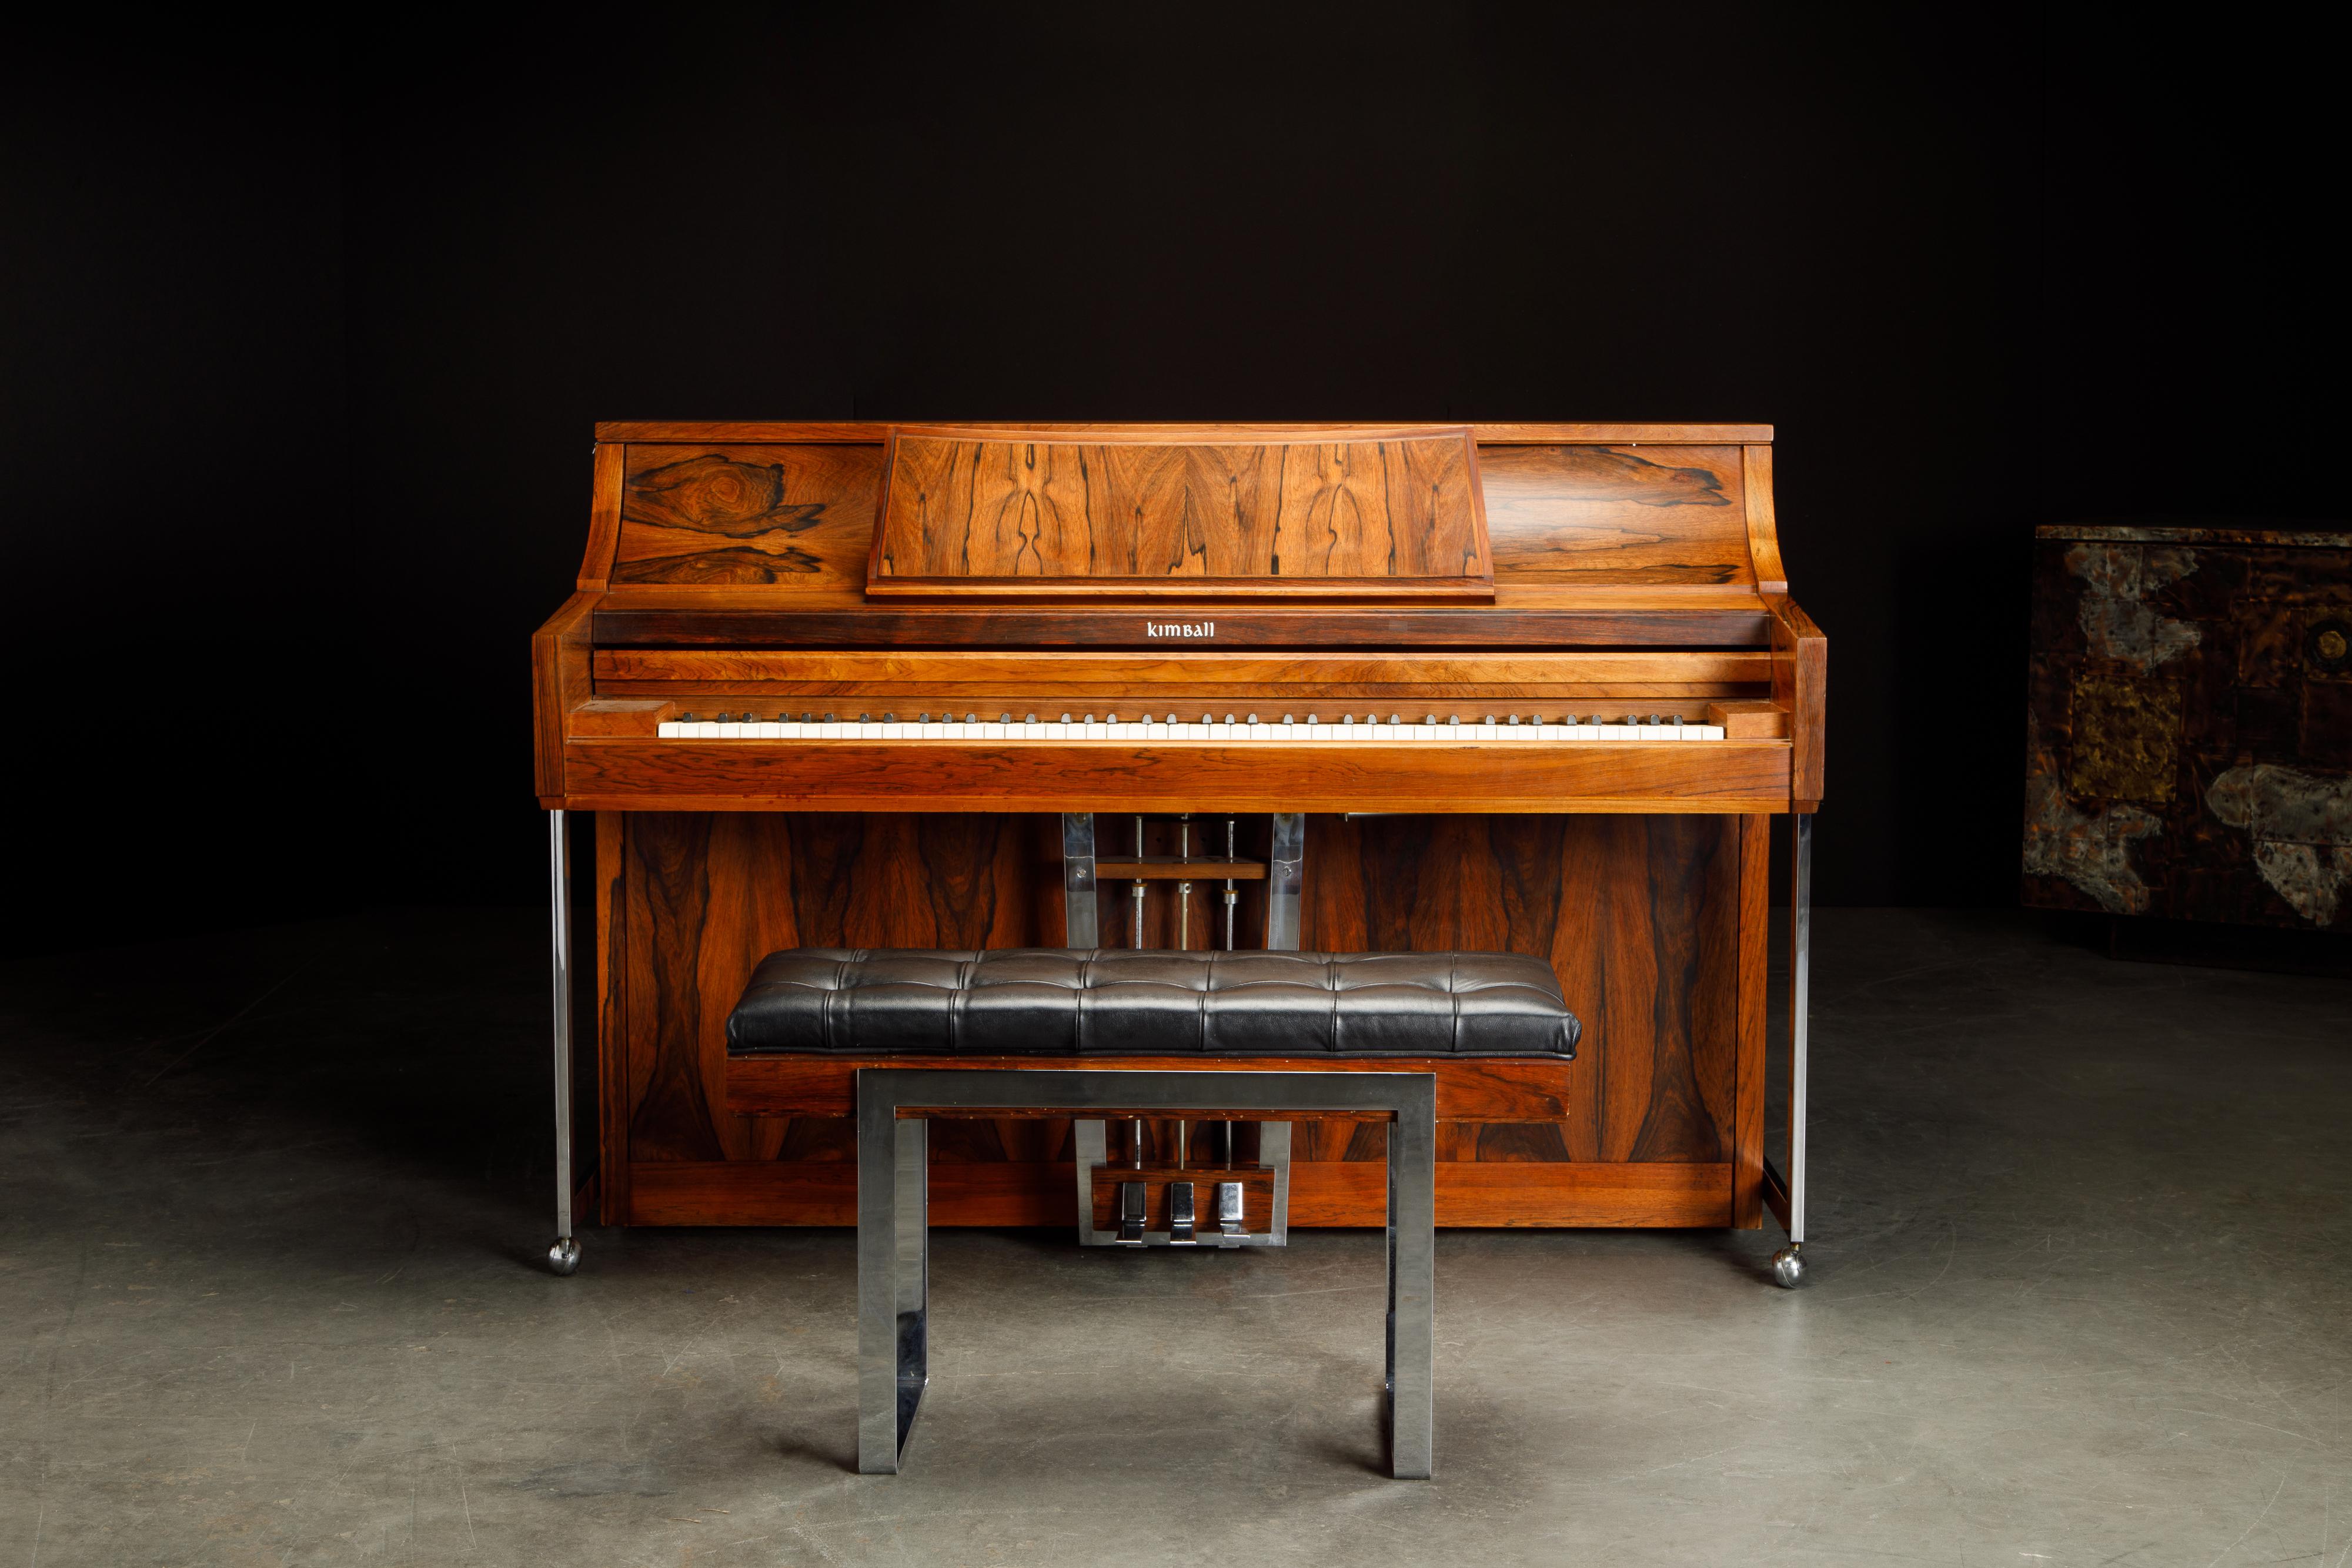 mid century modern piano